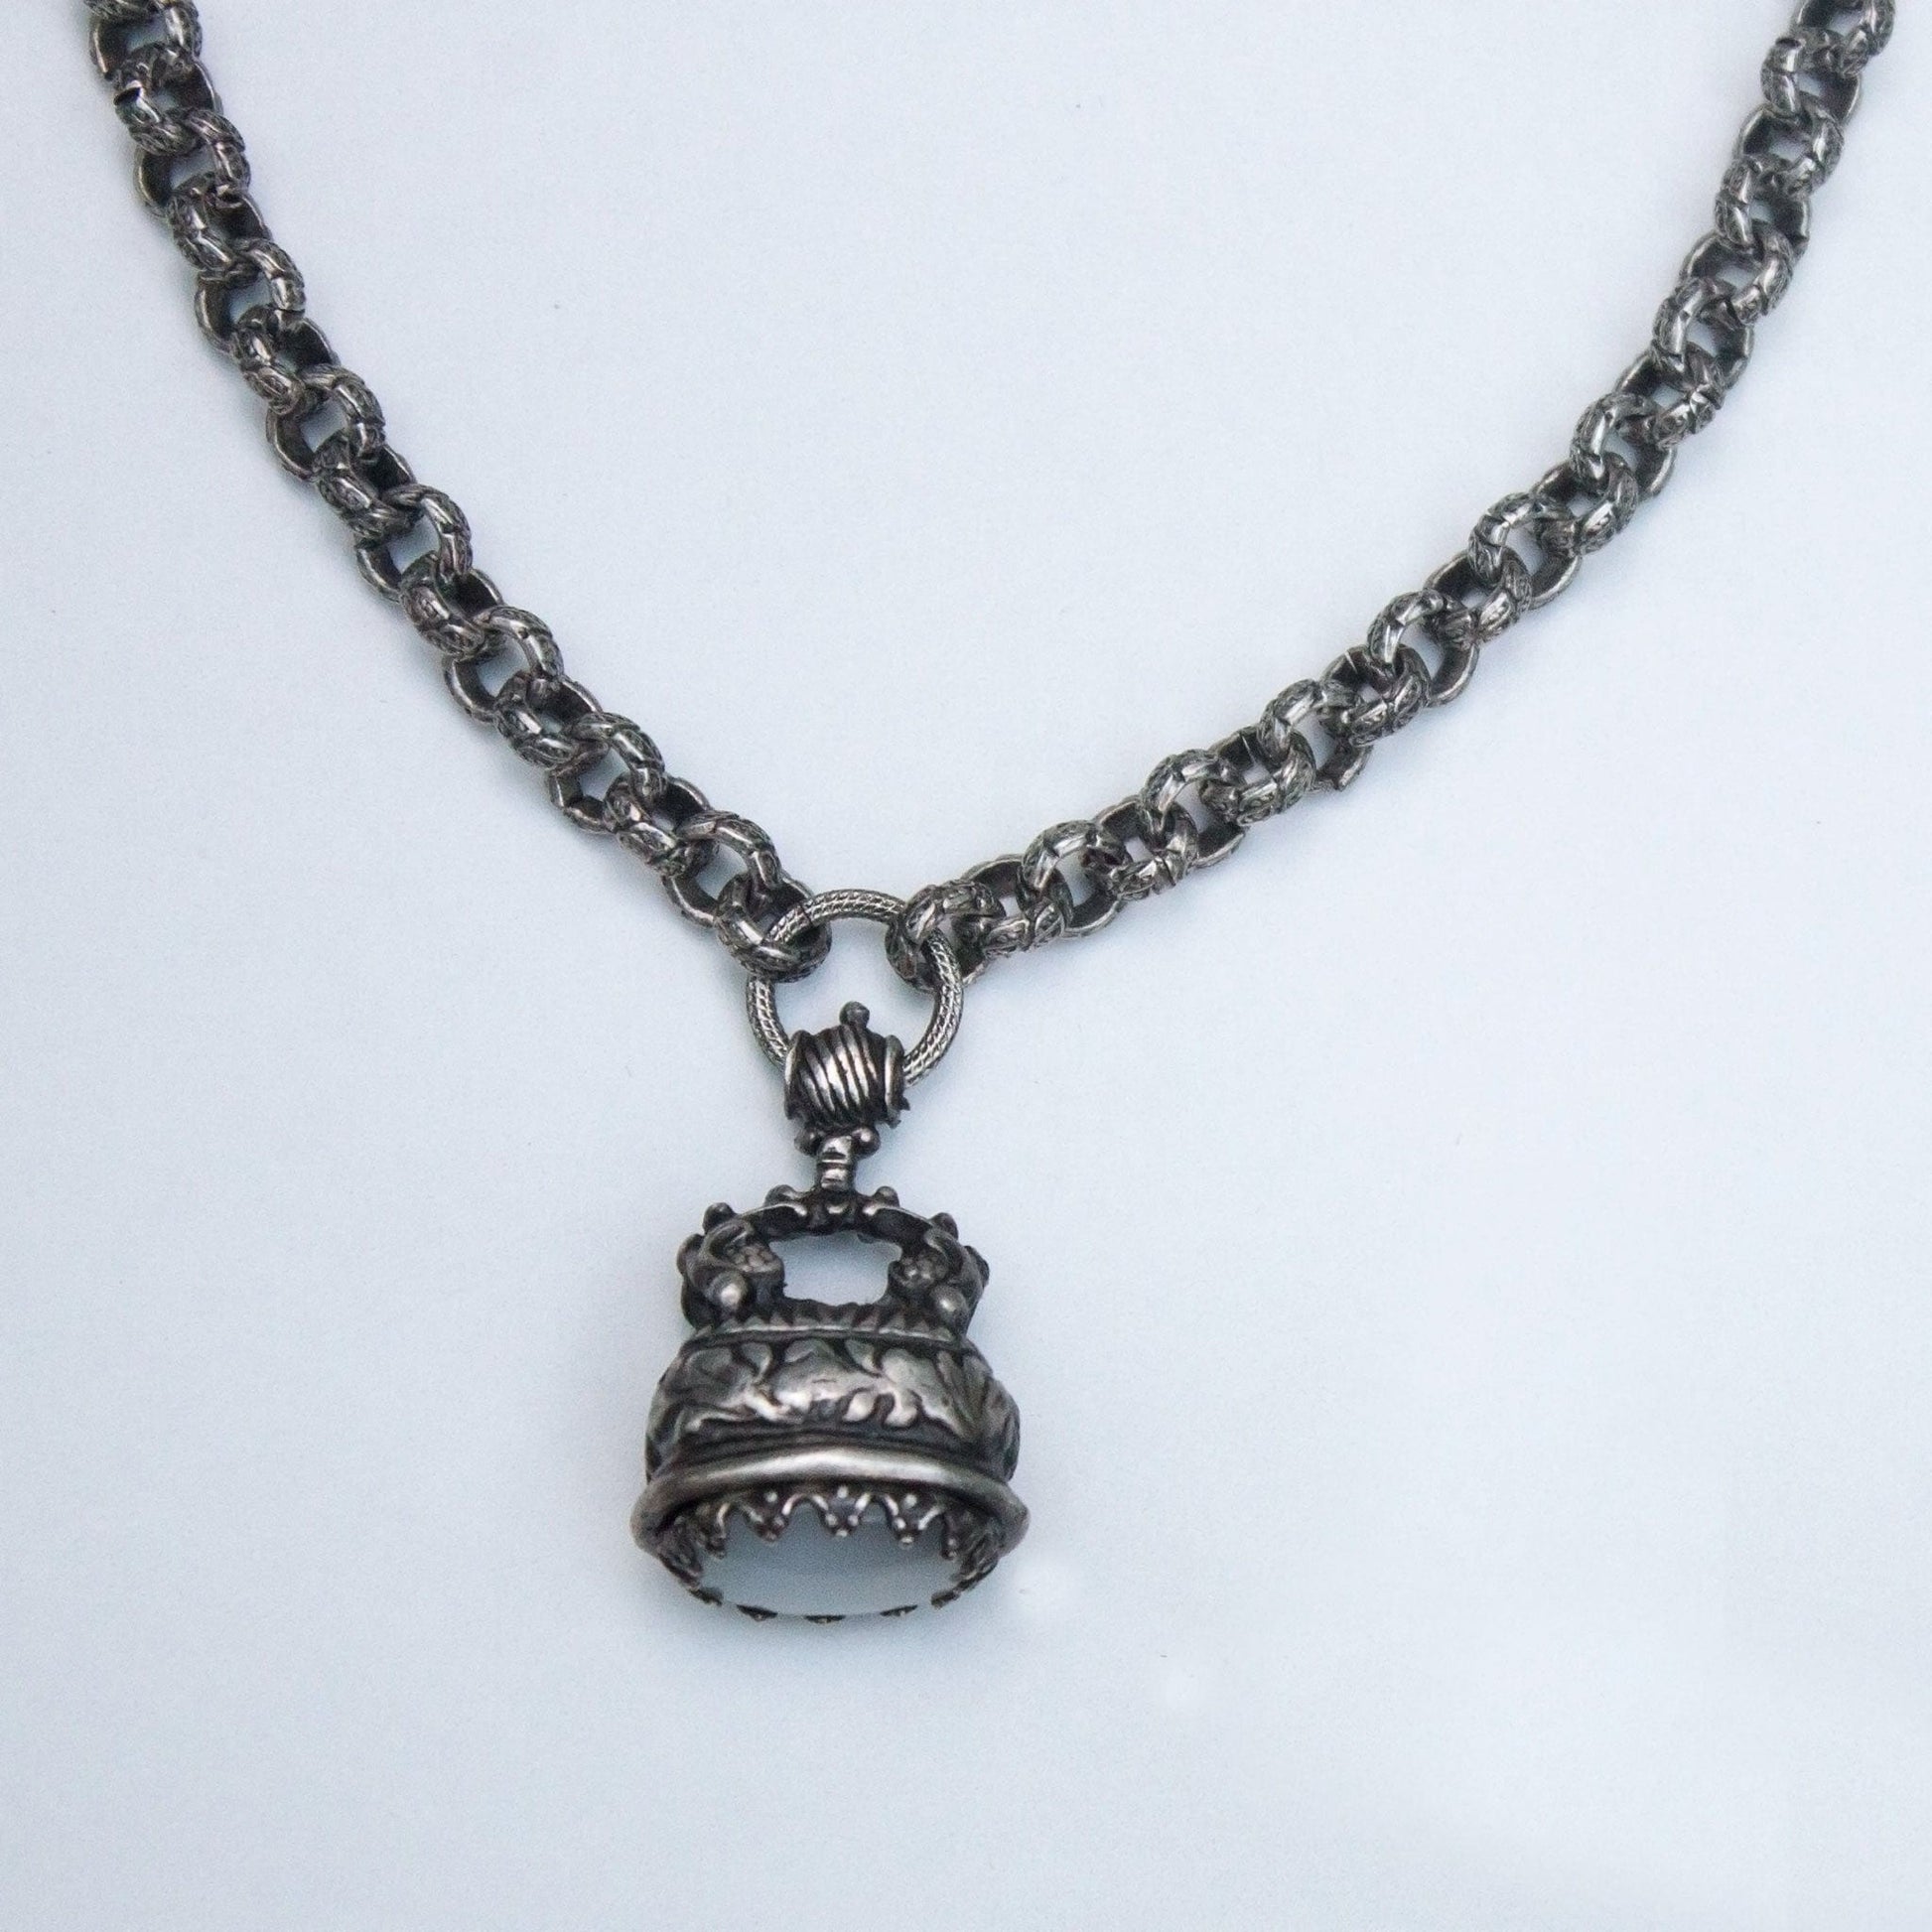 Silvertone Emblem Necklace Jewelry